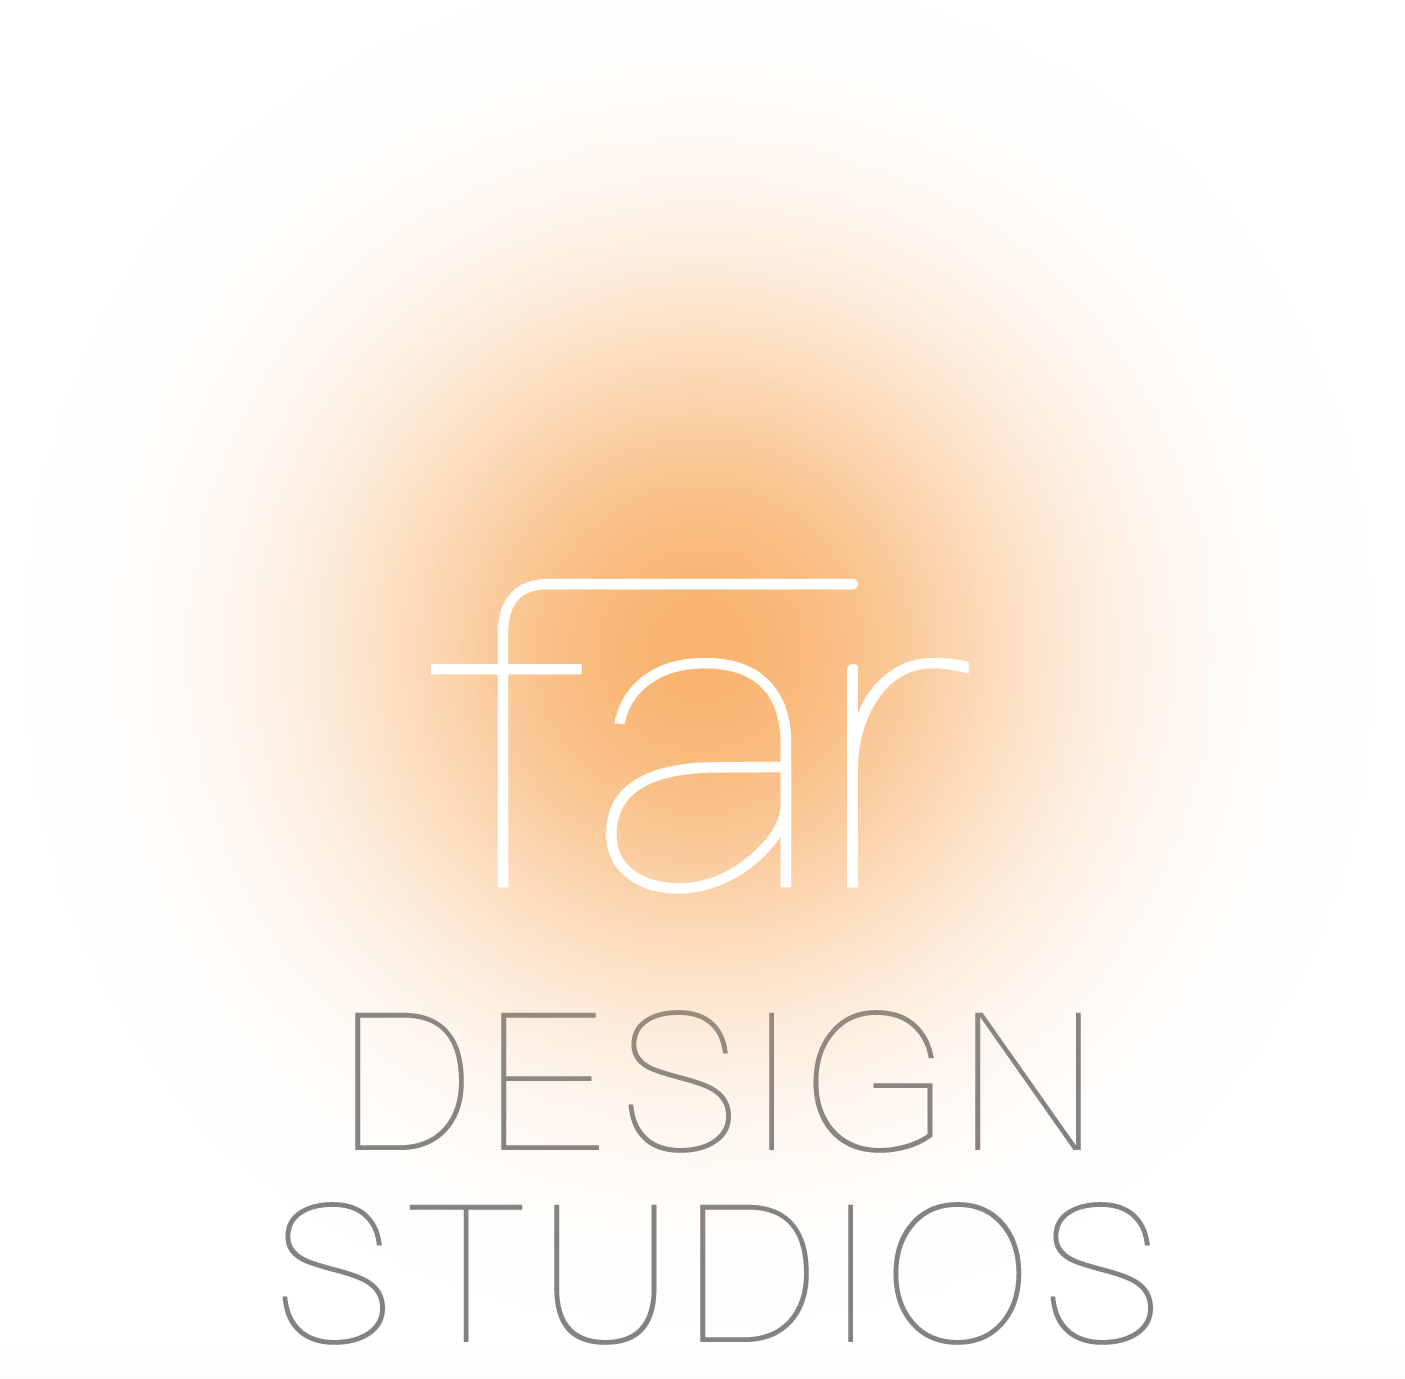 Far Design Studios